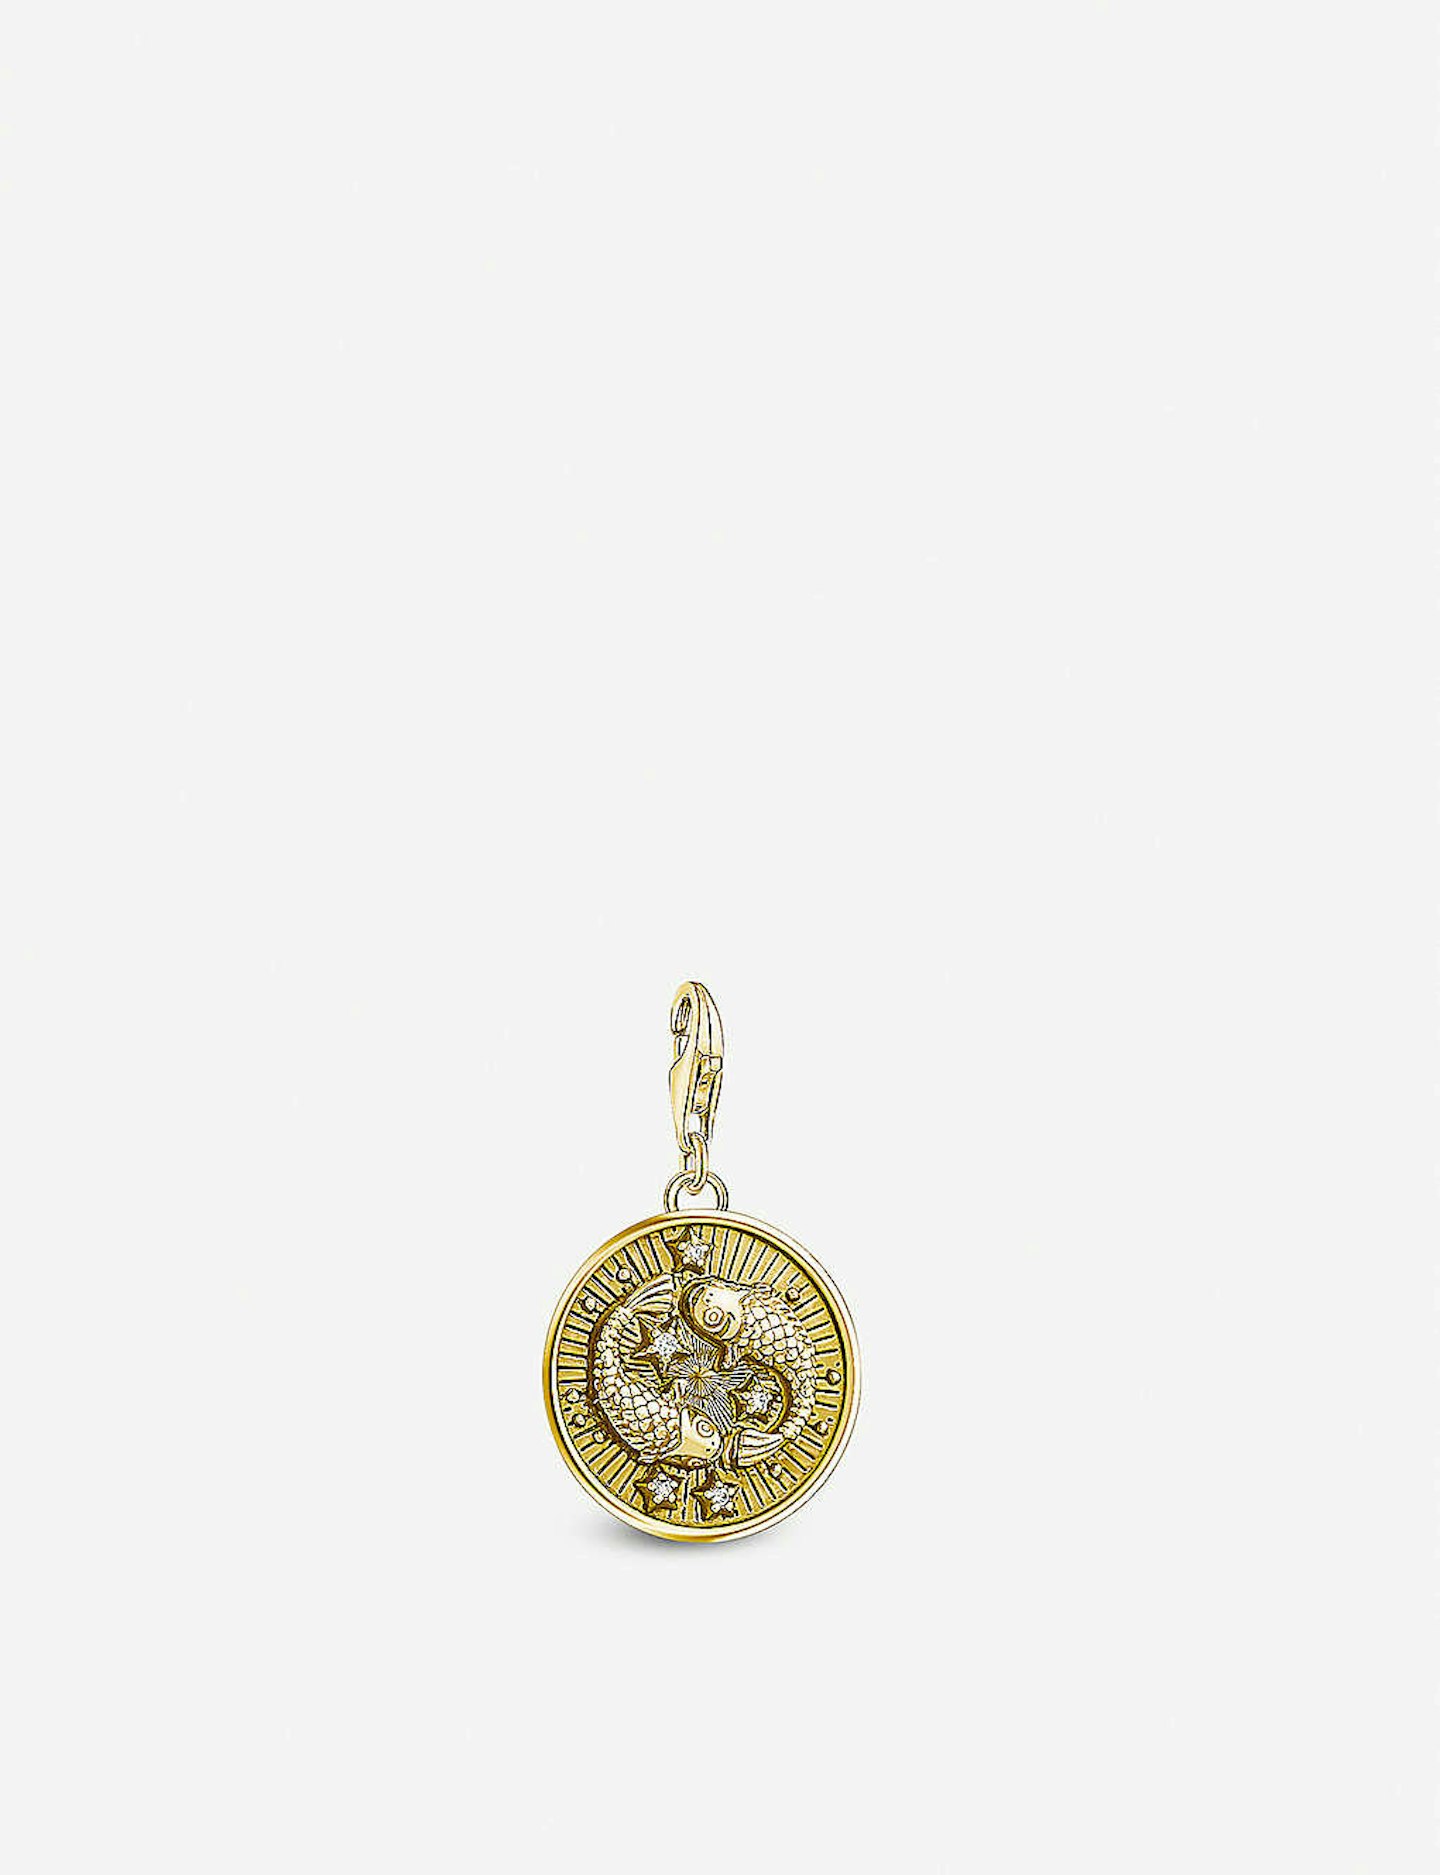 Thomas Sabo, Gold-Plated Zodiac Charm, £89